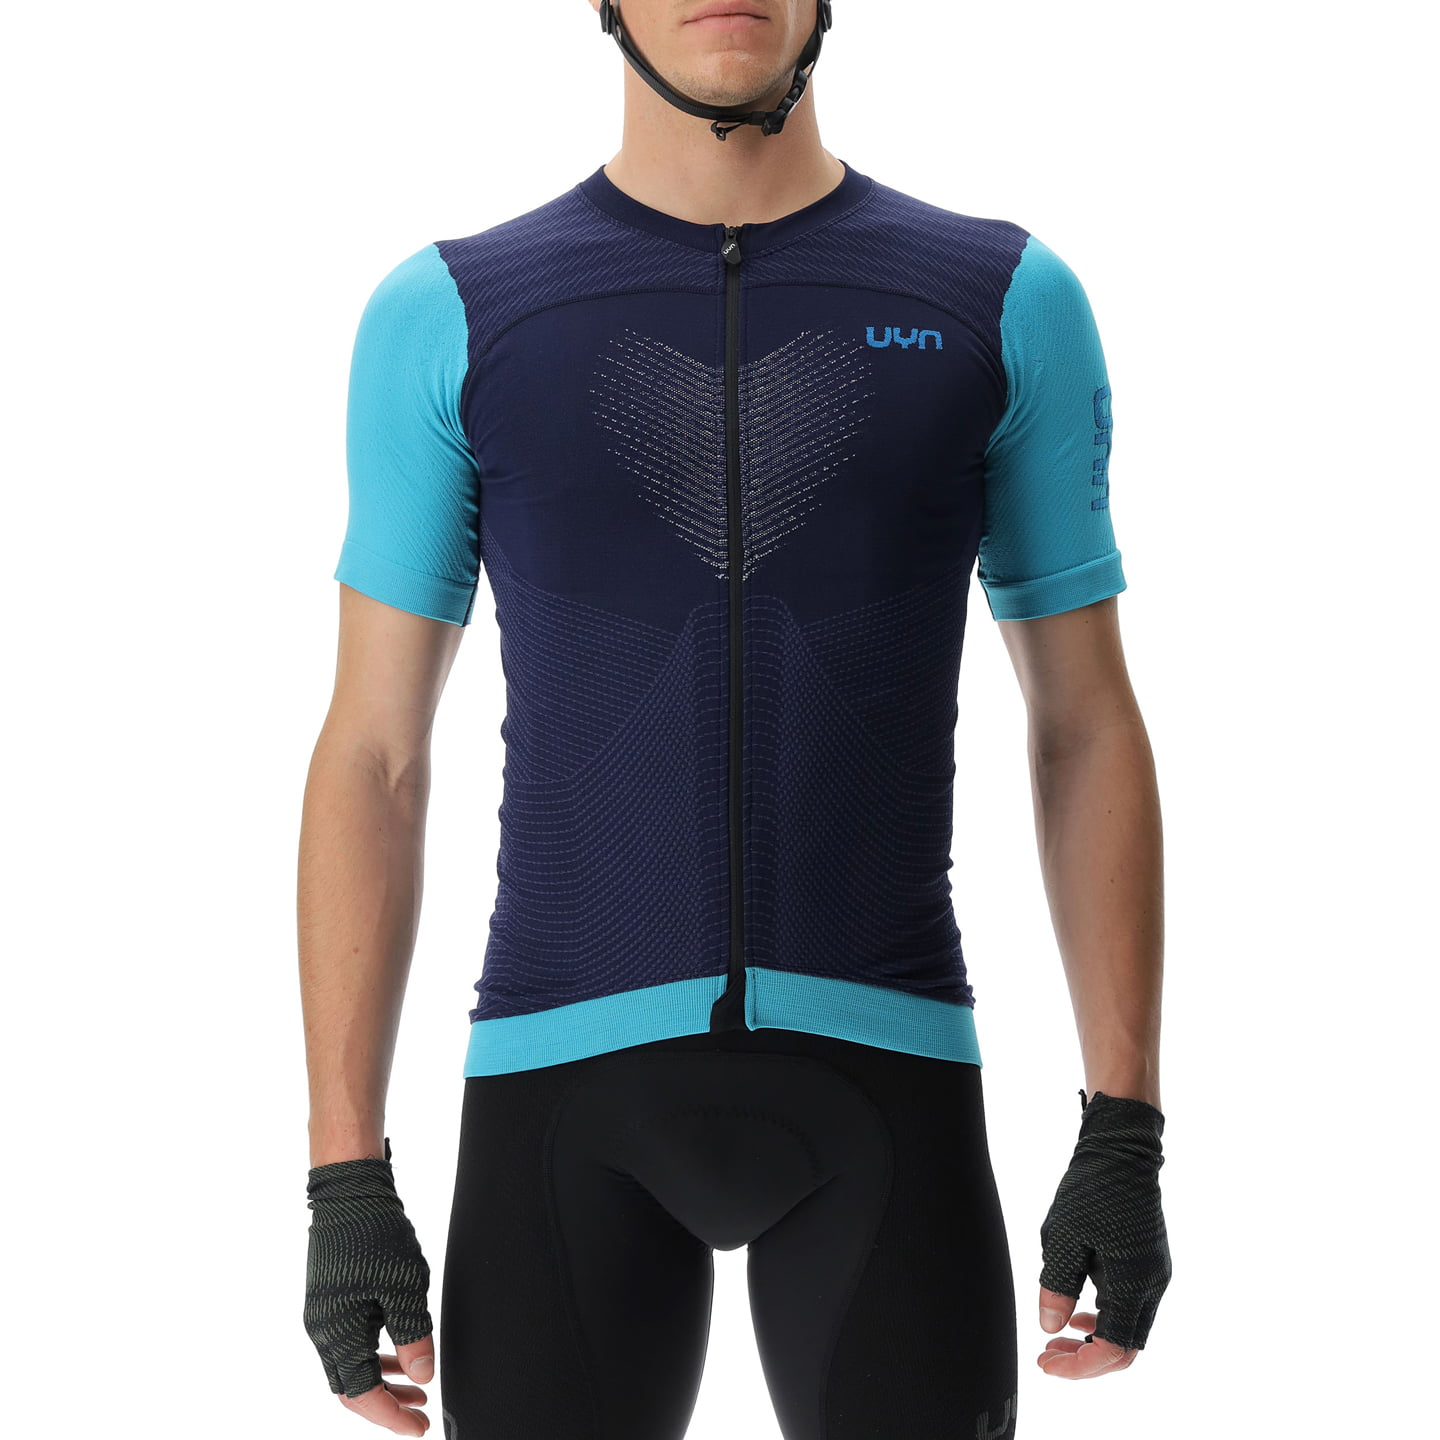 UYN Garda Short Sleeve Jersey, for men, size M, Cycling jersey, Cycling clothing